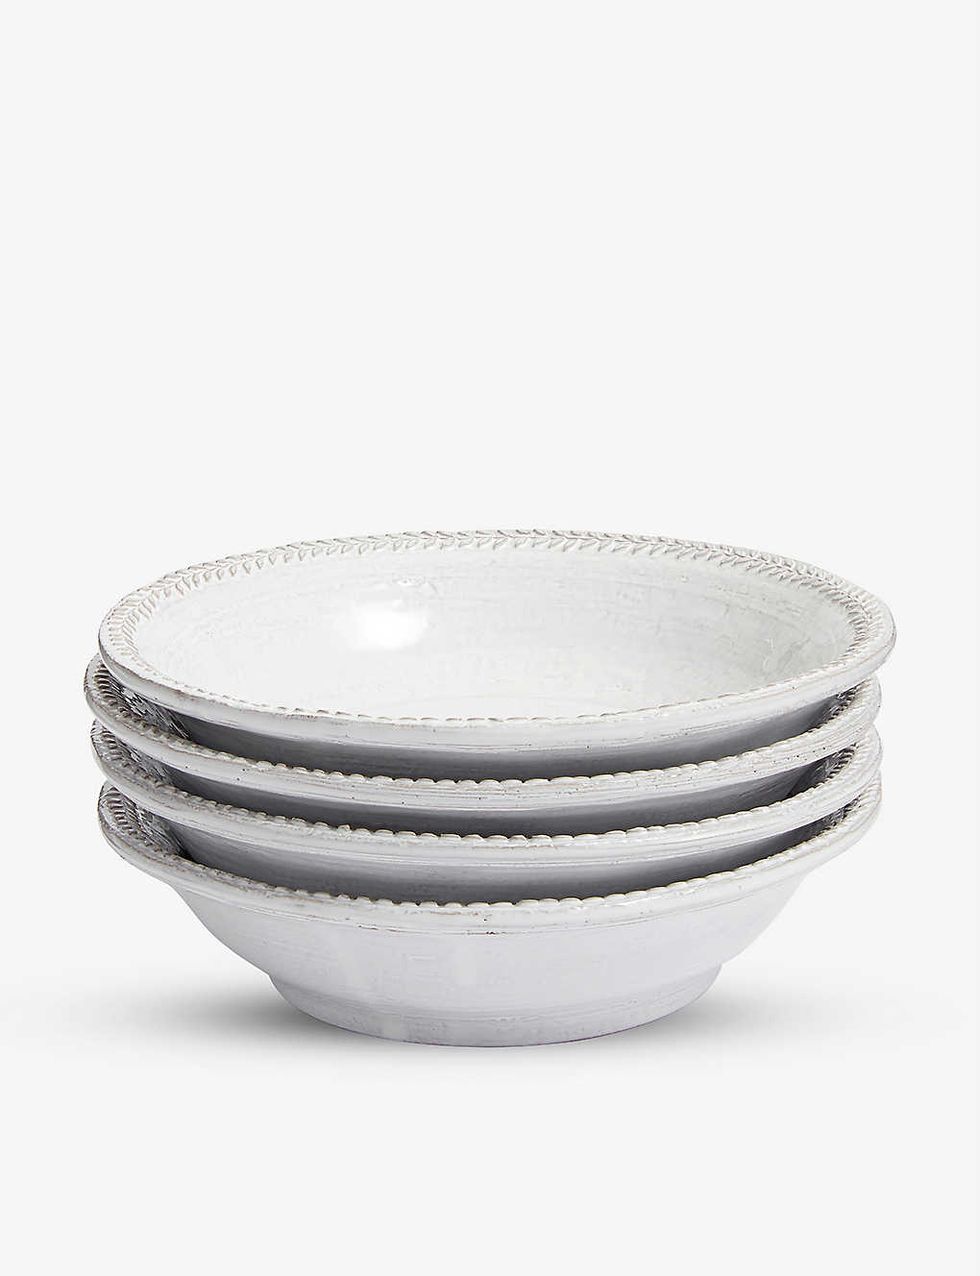 Hillcrest handmade stoneware pasta bowls set of four